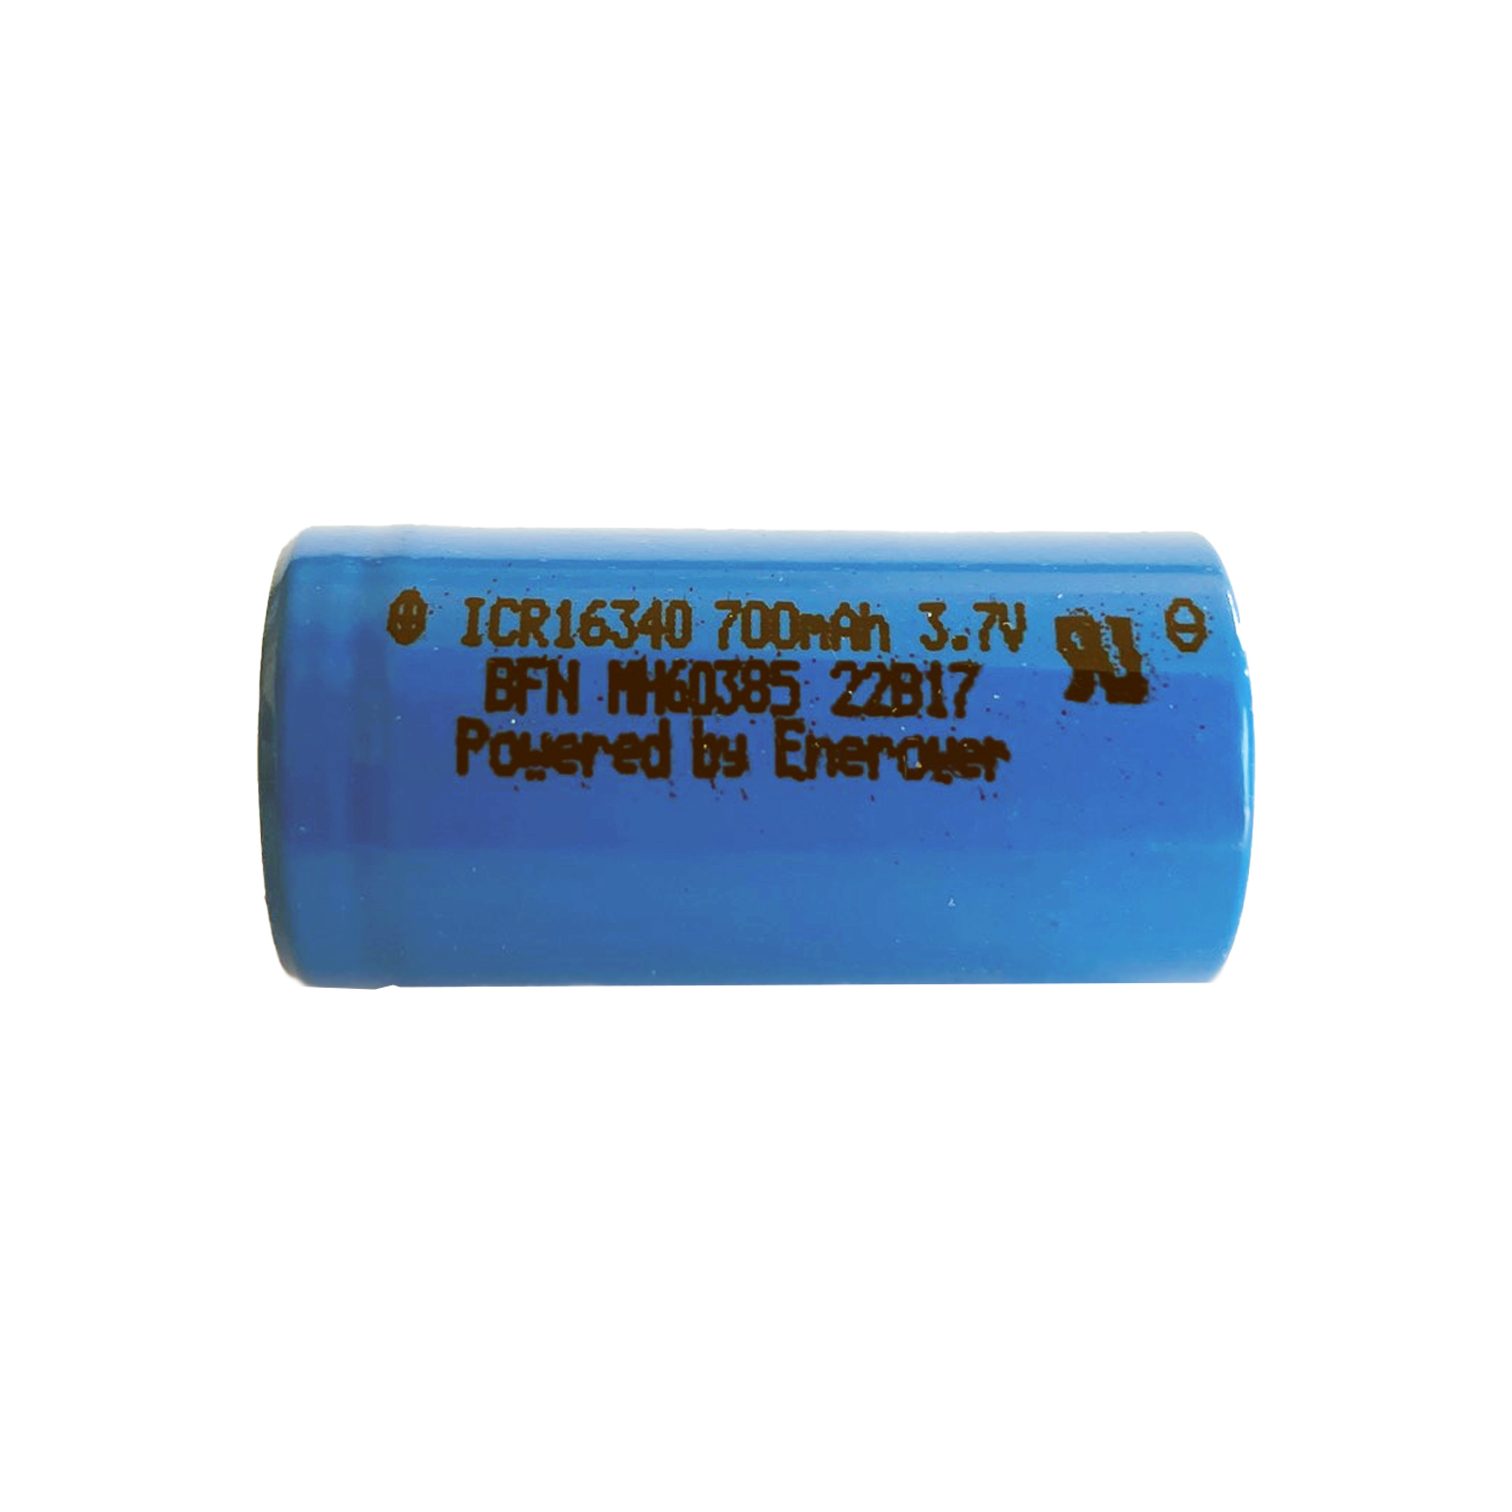 Enerpower 16340 3,6V Li-Ion Cell 700 mAh 2C (UL) 